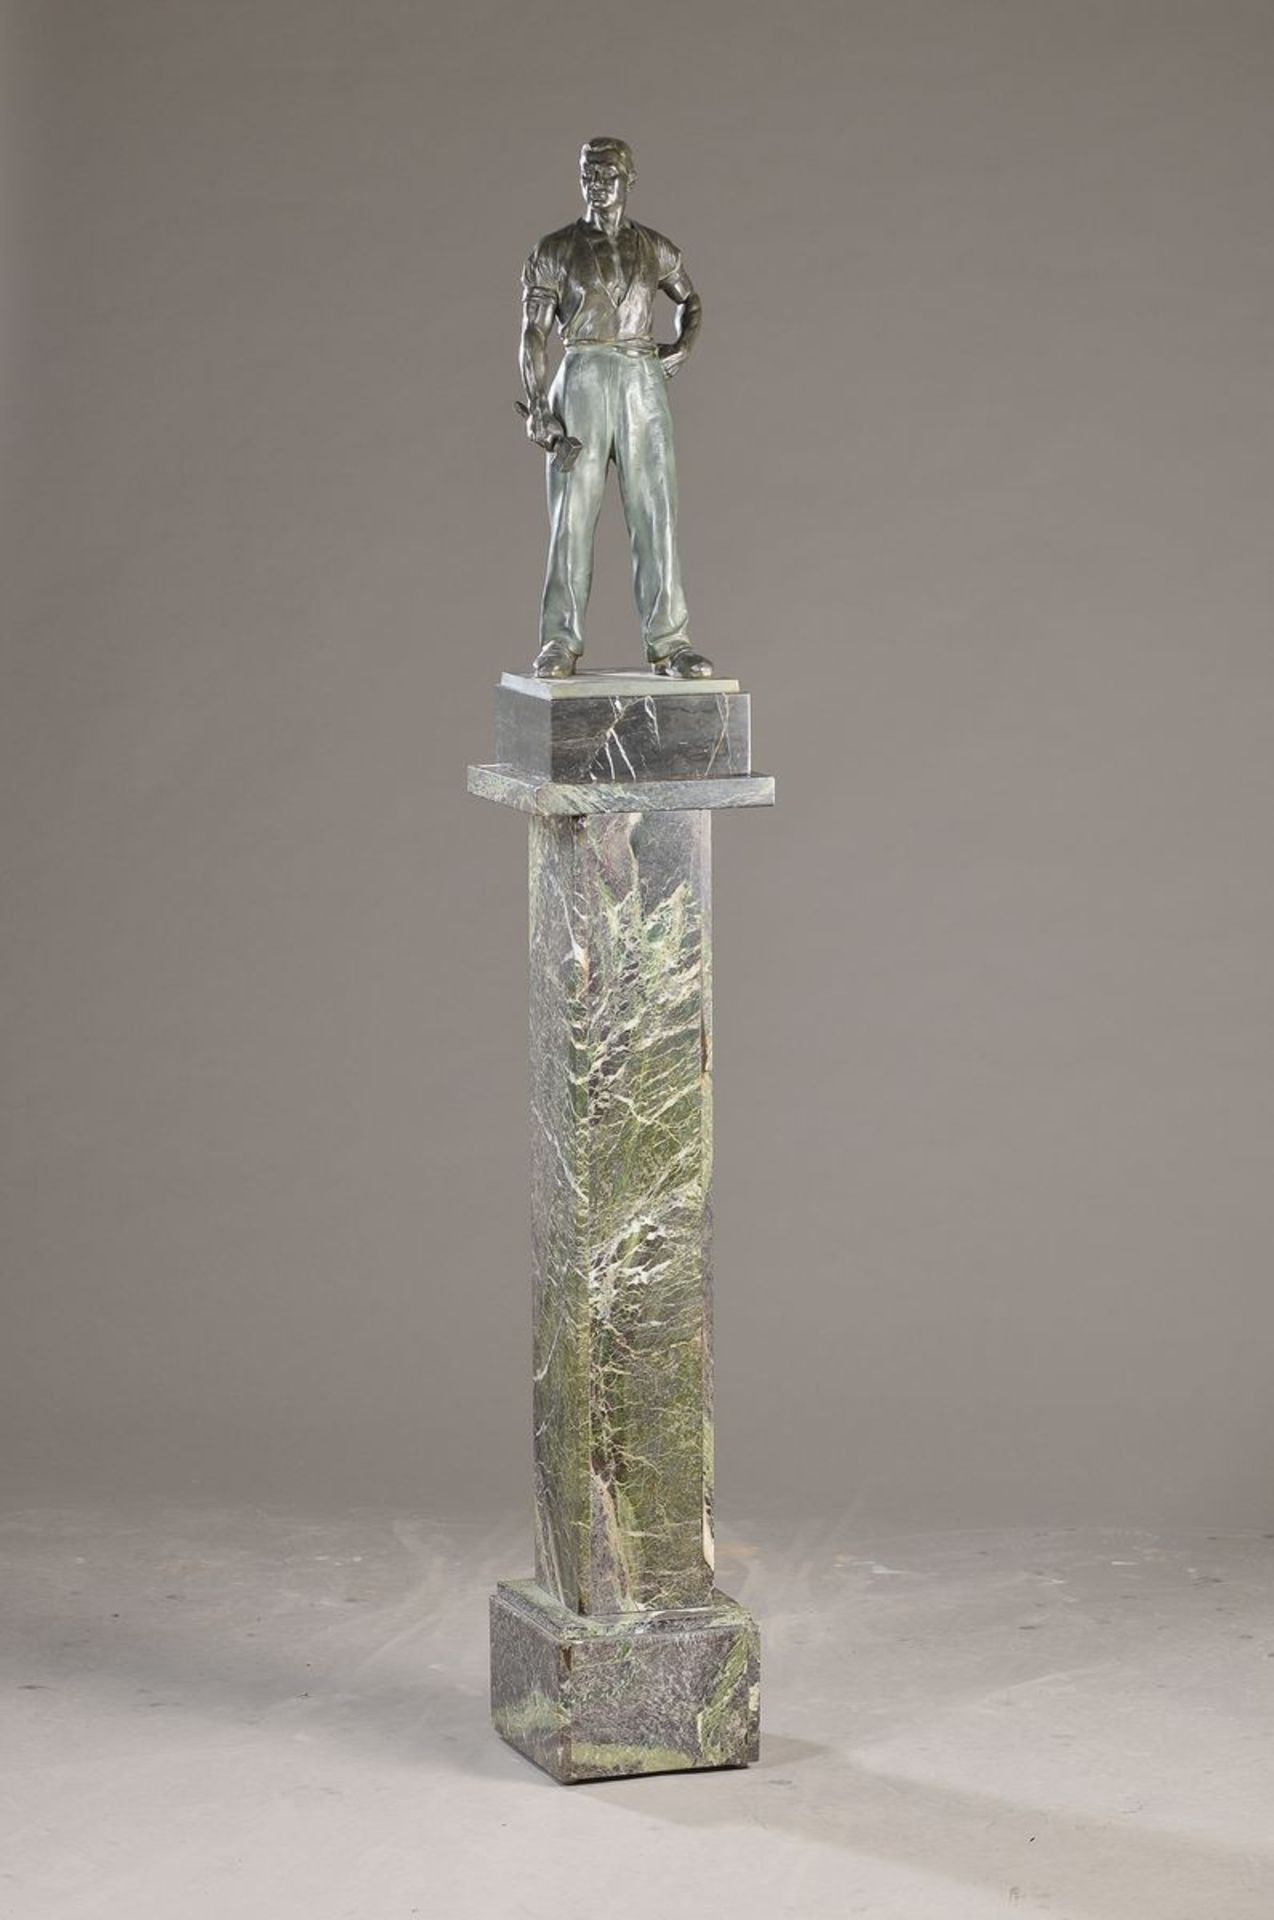 Nicolaus Wendelin Schmidt, 1883-1954, Sculpture of a worker with Hammer in the hand,bronze cast,